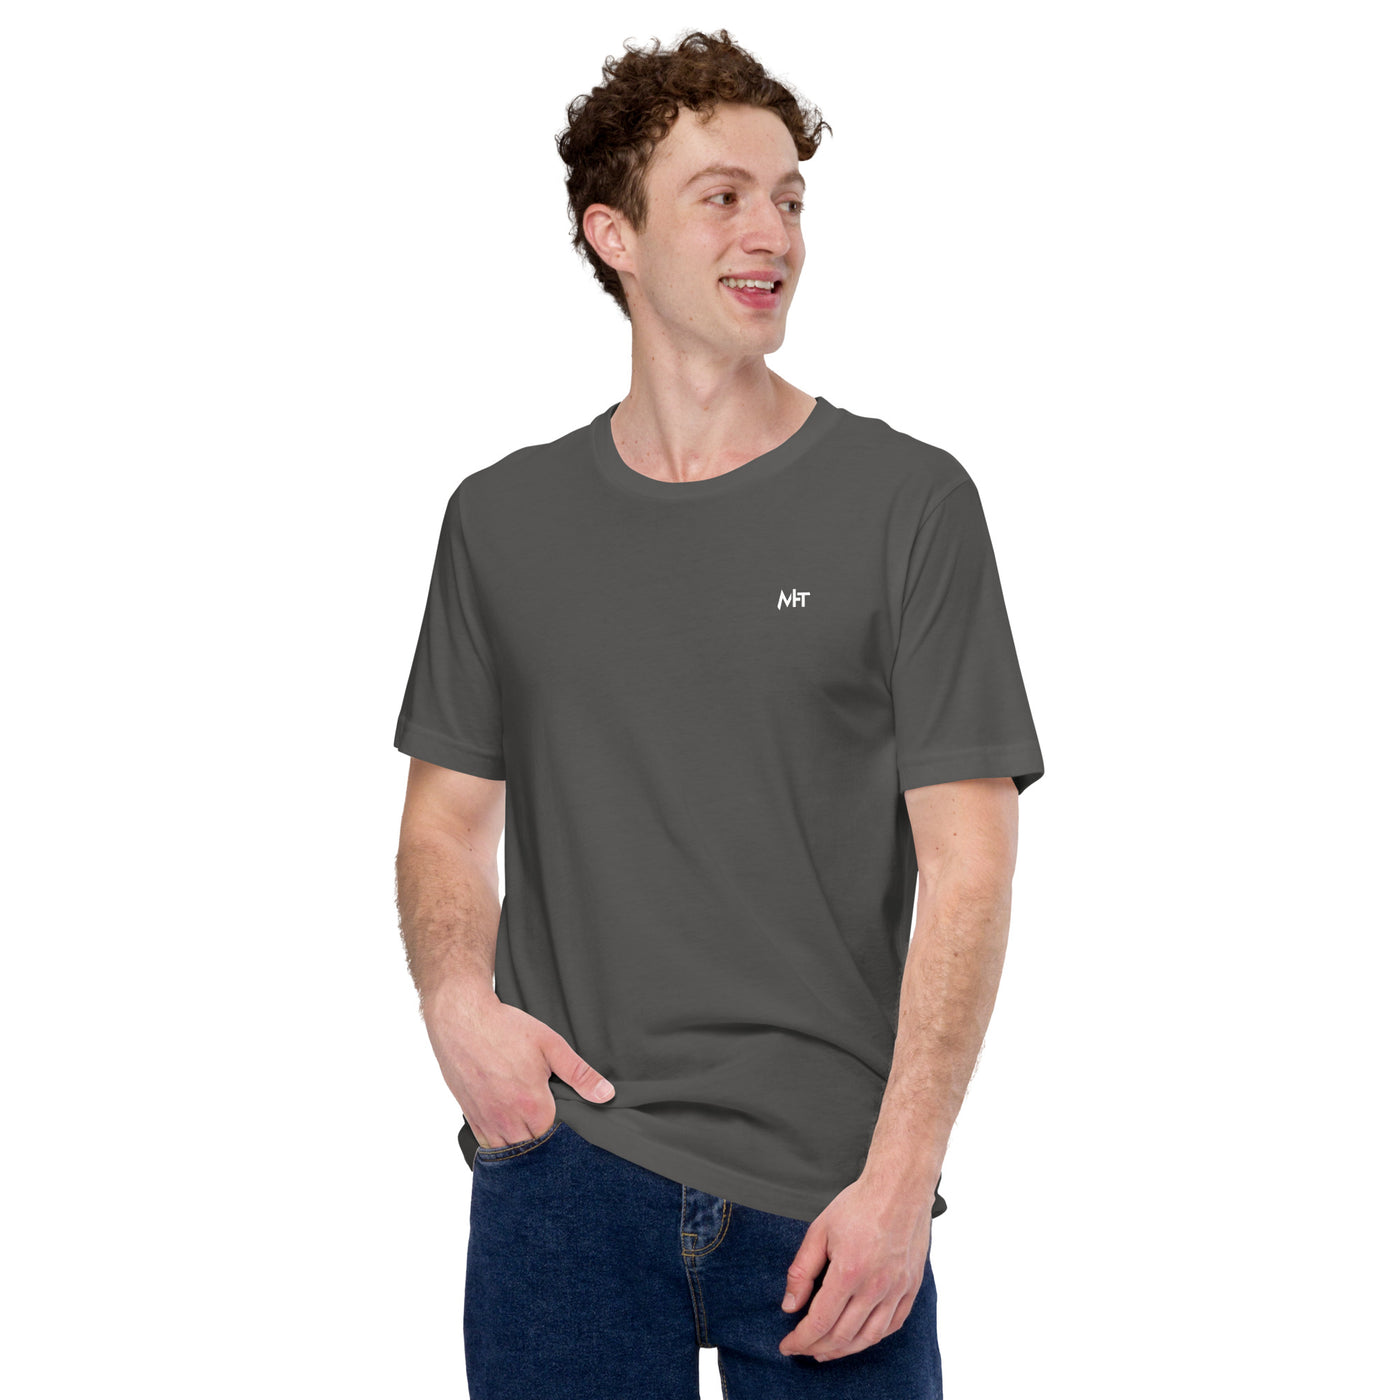 Brother of the Birthday Boy Unisex t-shirt ( Back Print )